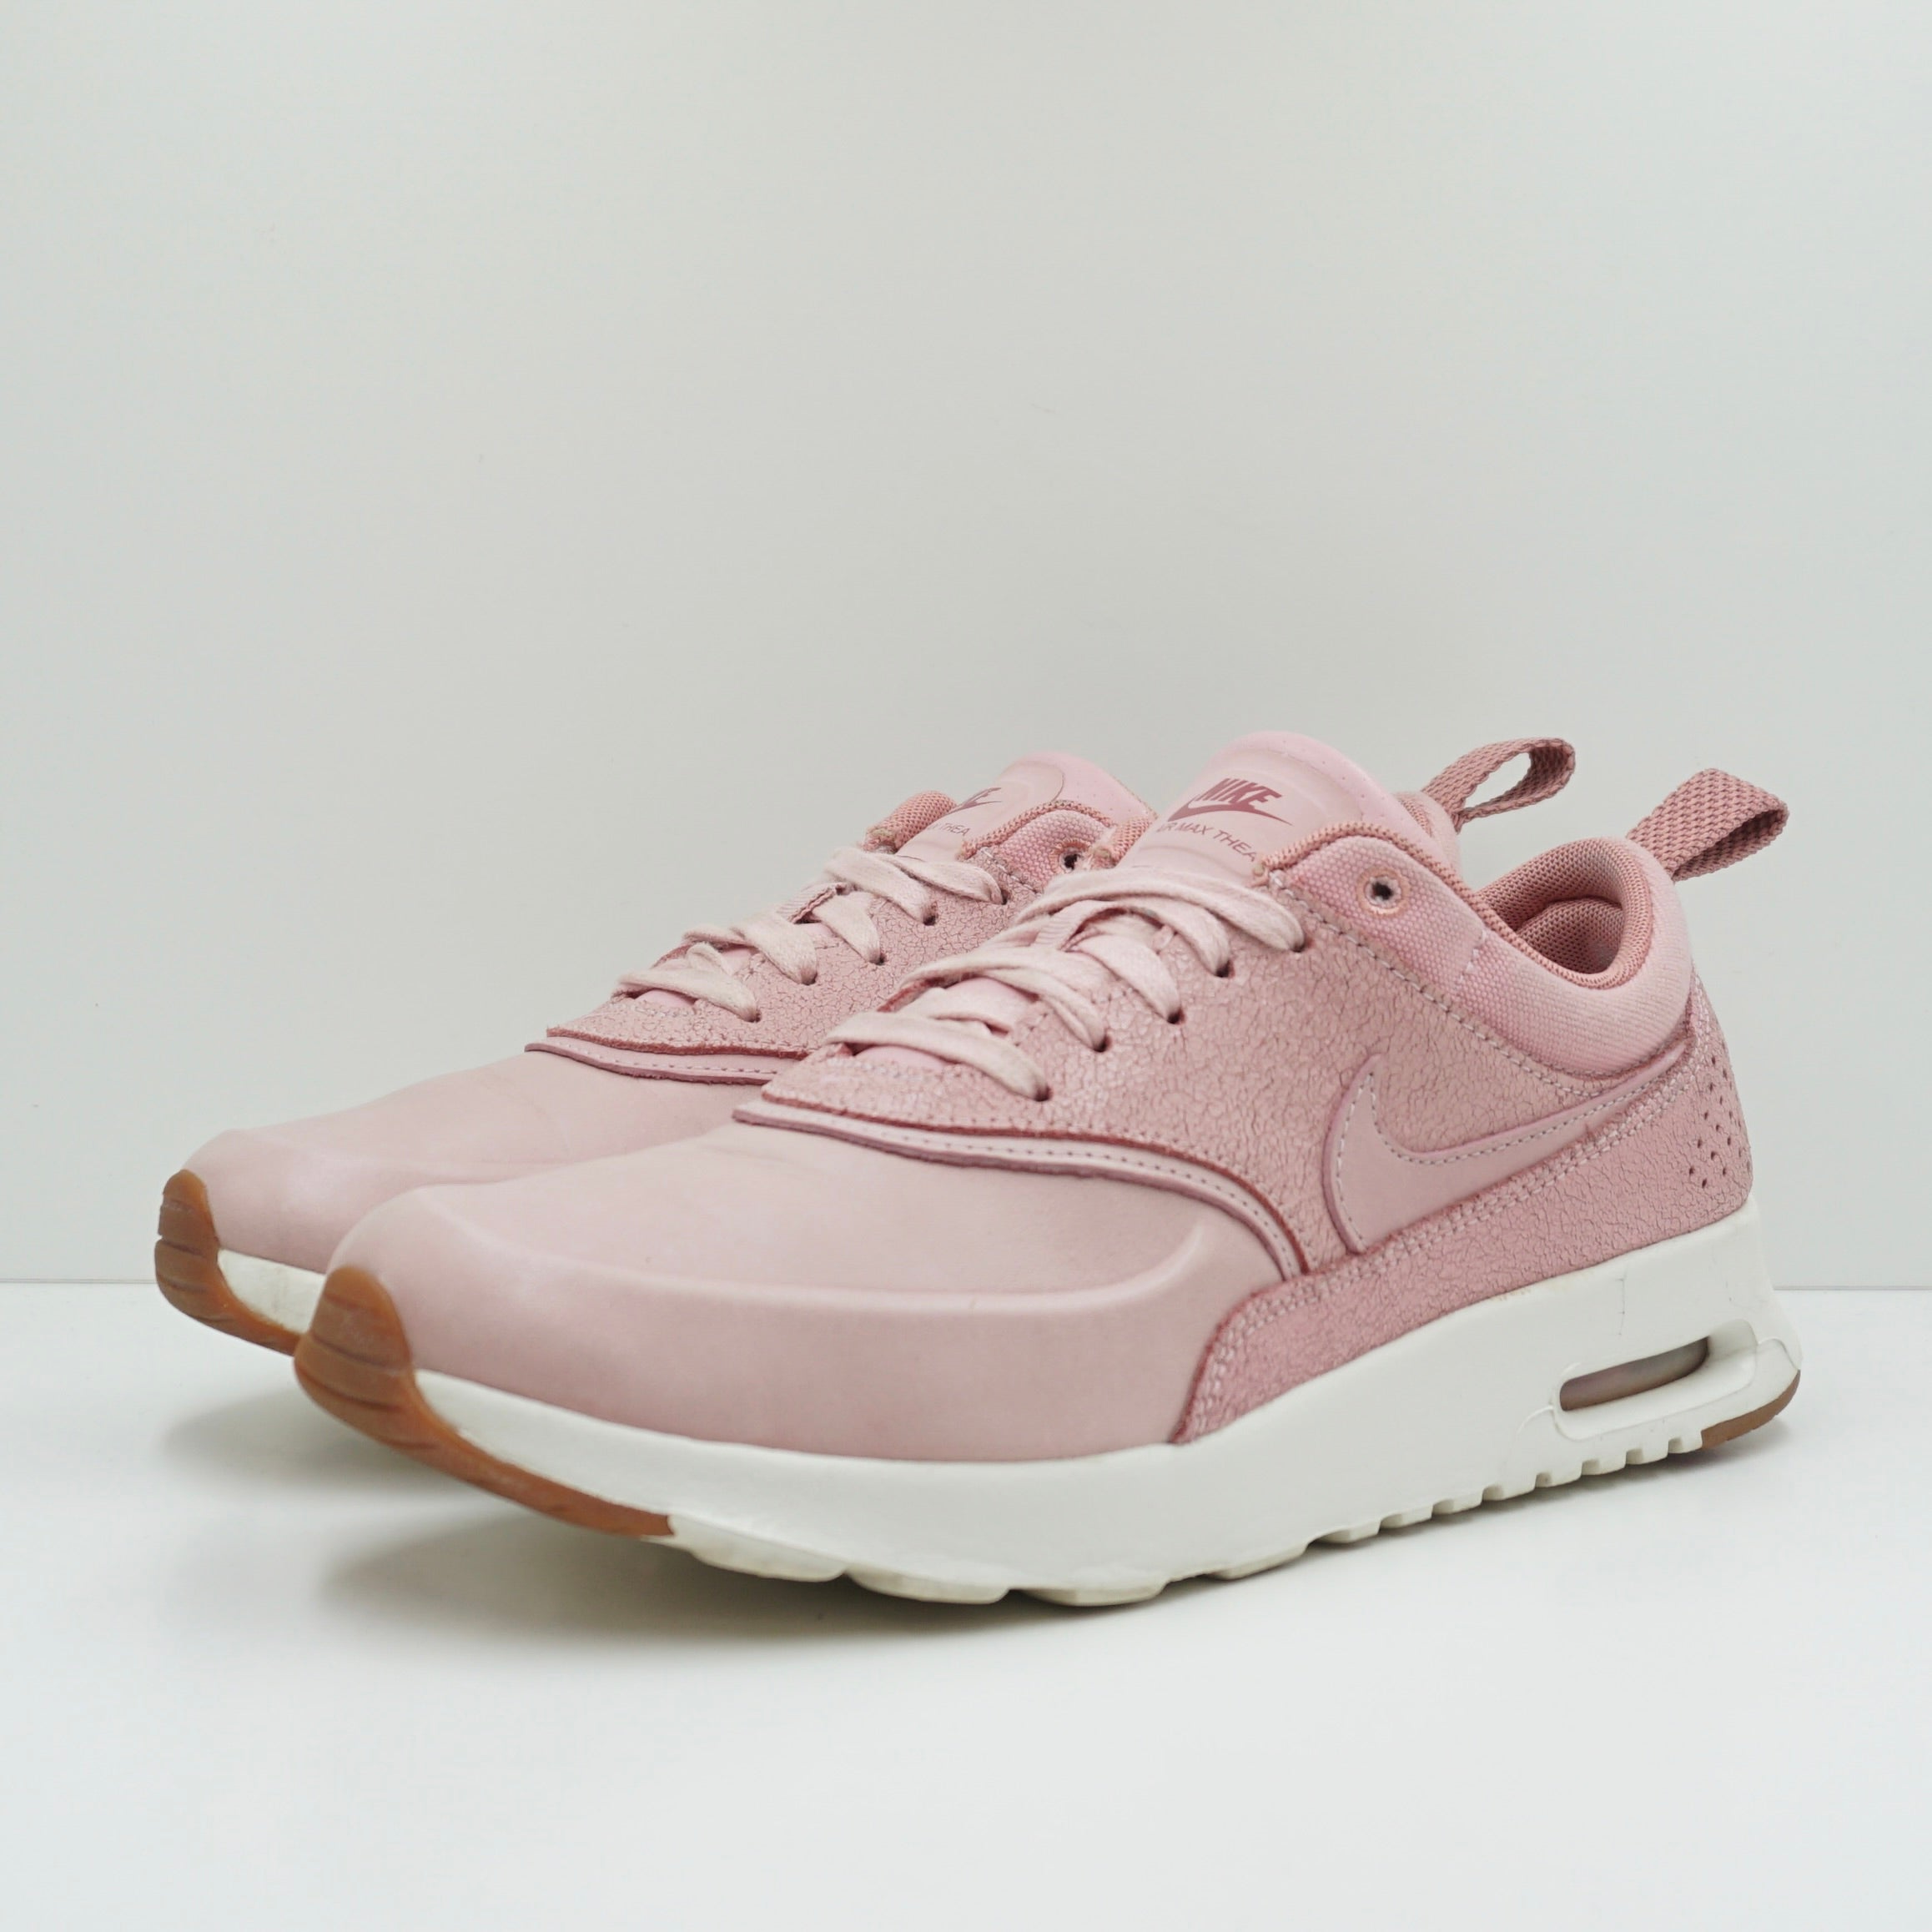 Nike Air Max Thea Premium Pink Glaze (W)